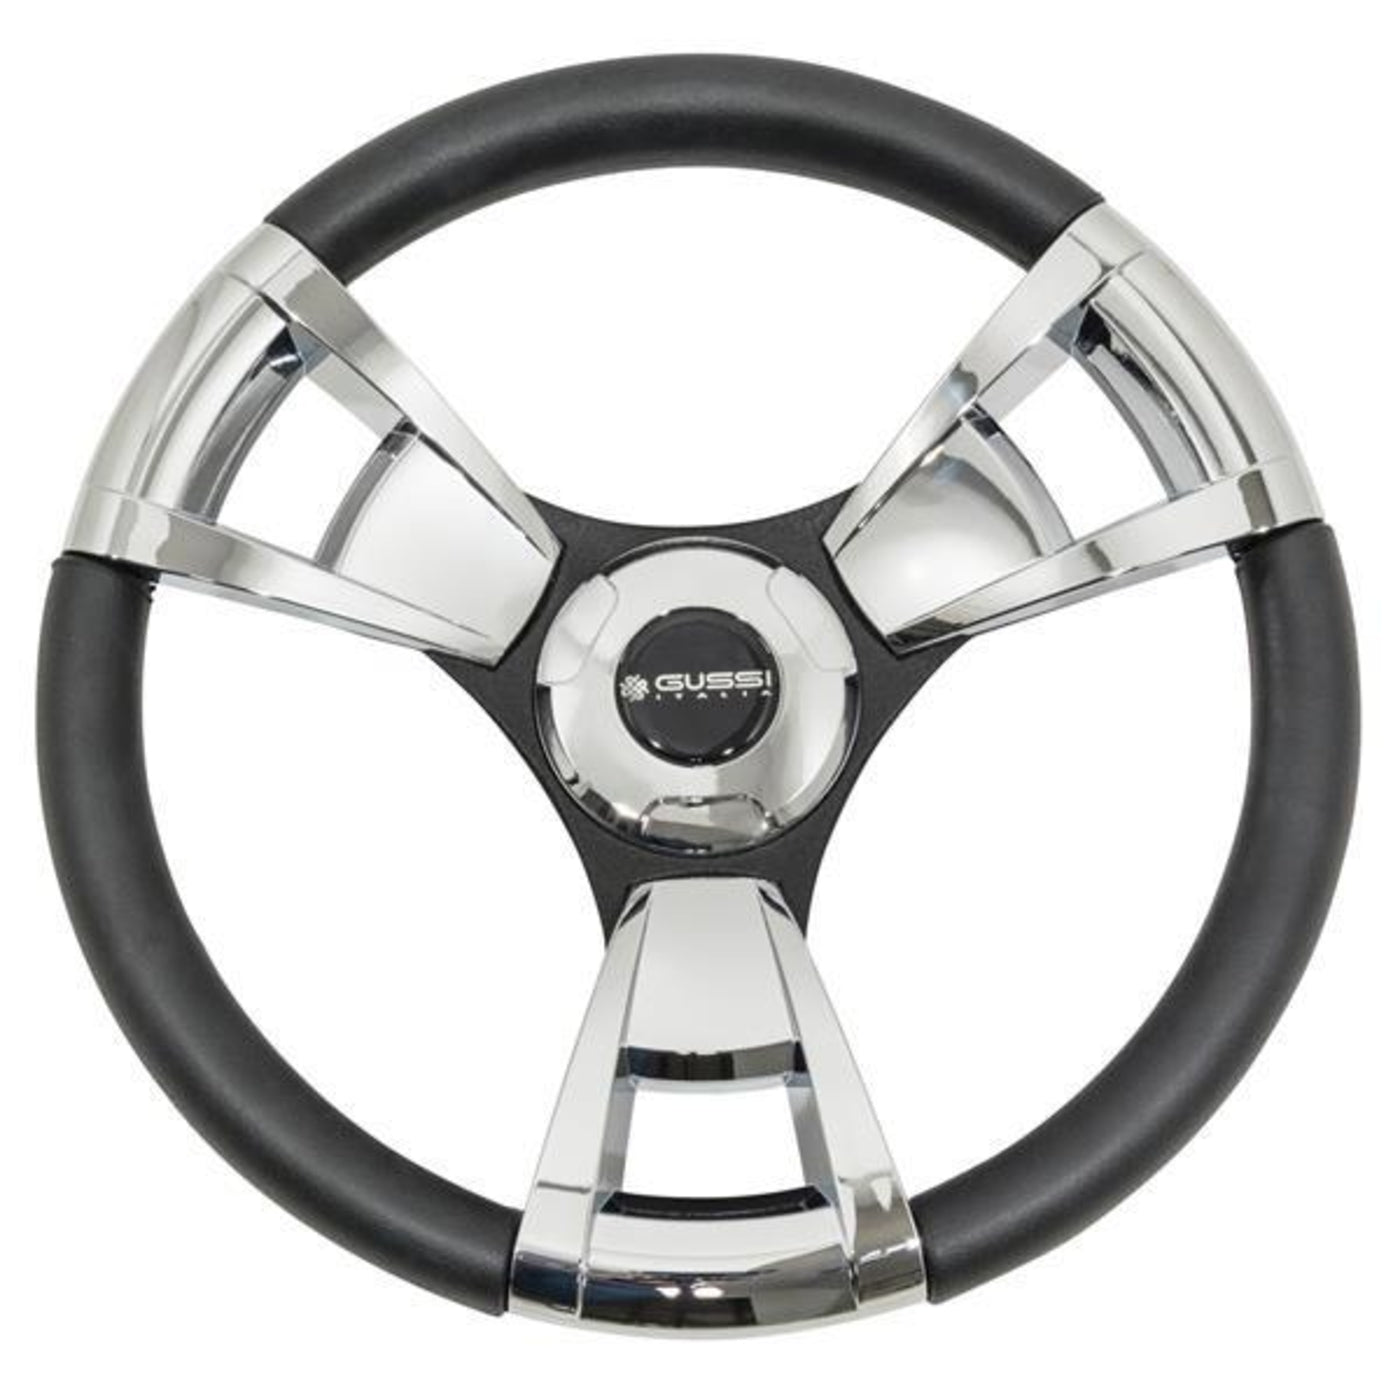 Gussi Italia¬Æ Model 13 Black/Chrome Steering Wheel For All Club Car Precedent Models